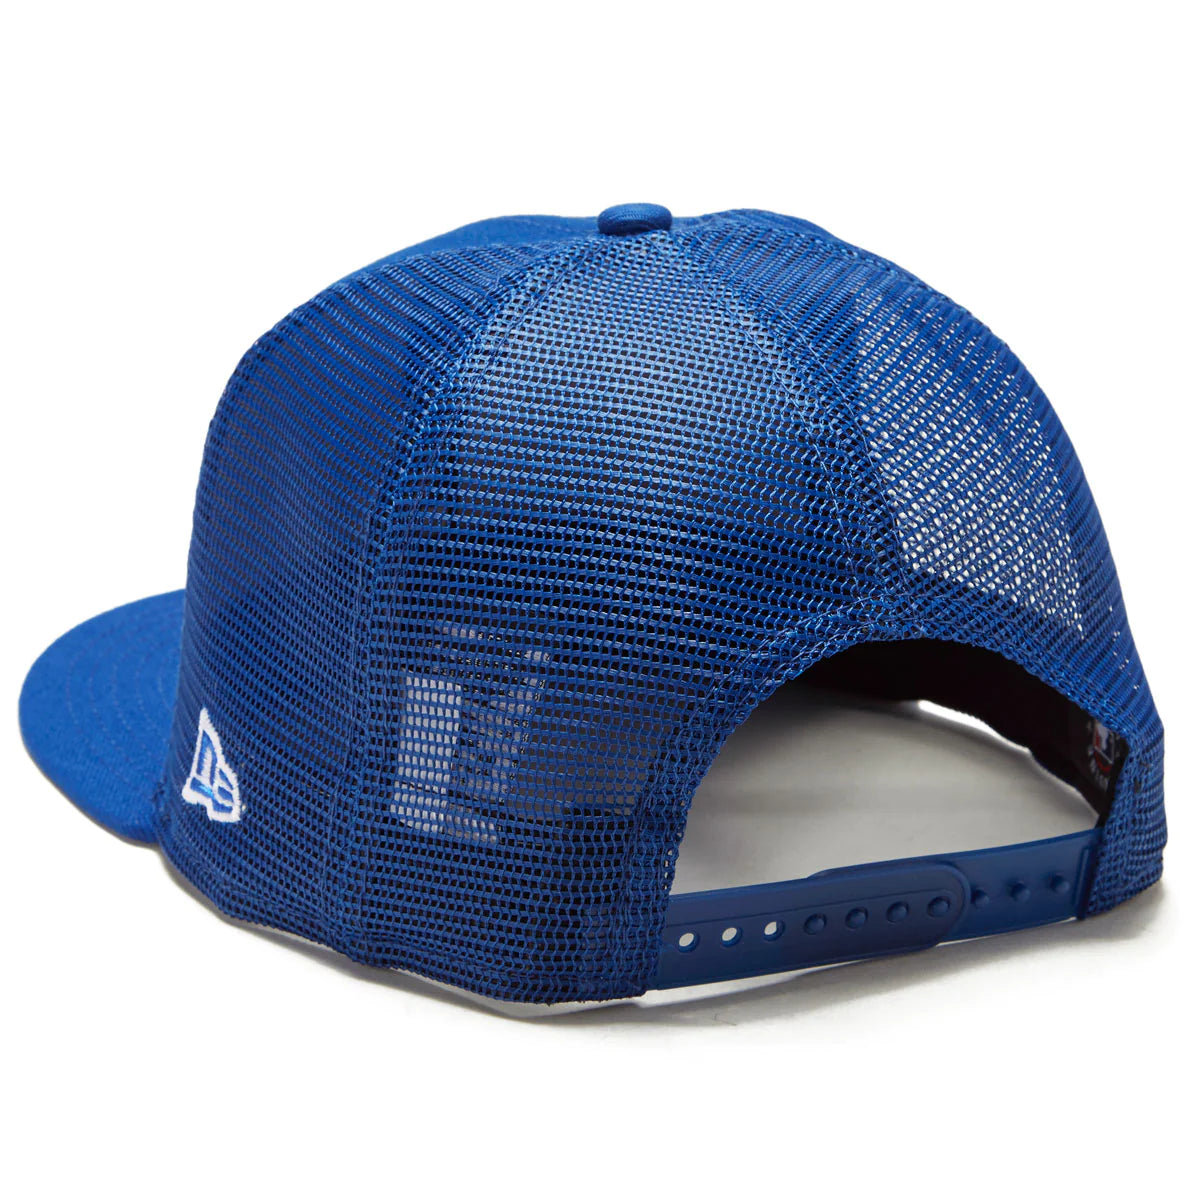 Chicago Cubs New Era Blue 9FIFTY Mesh Trucker Snapback Hat